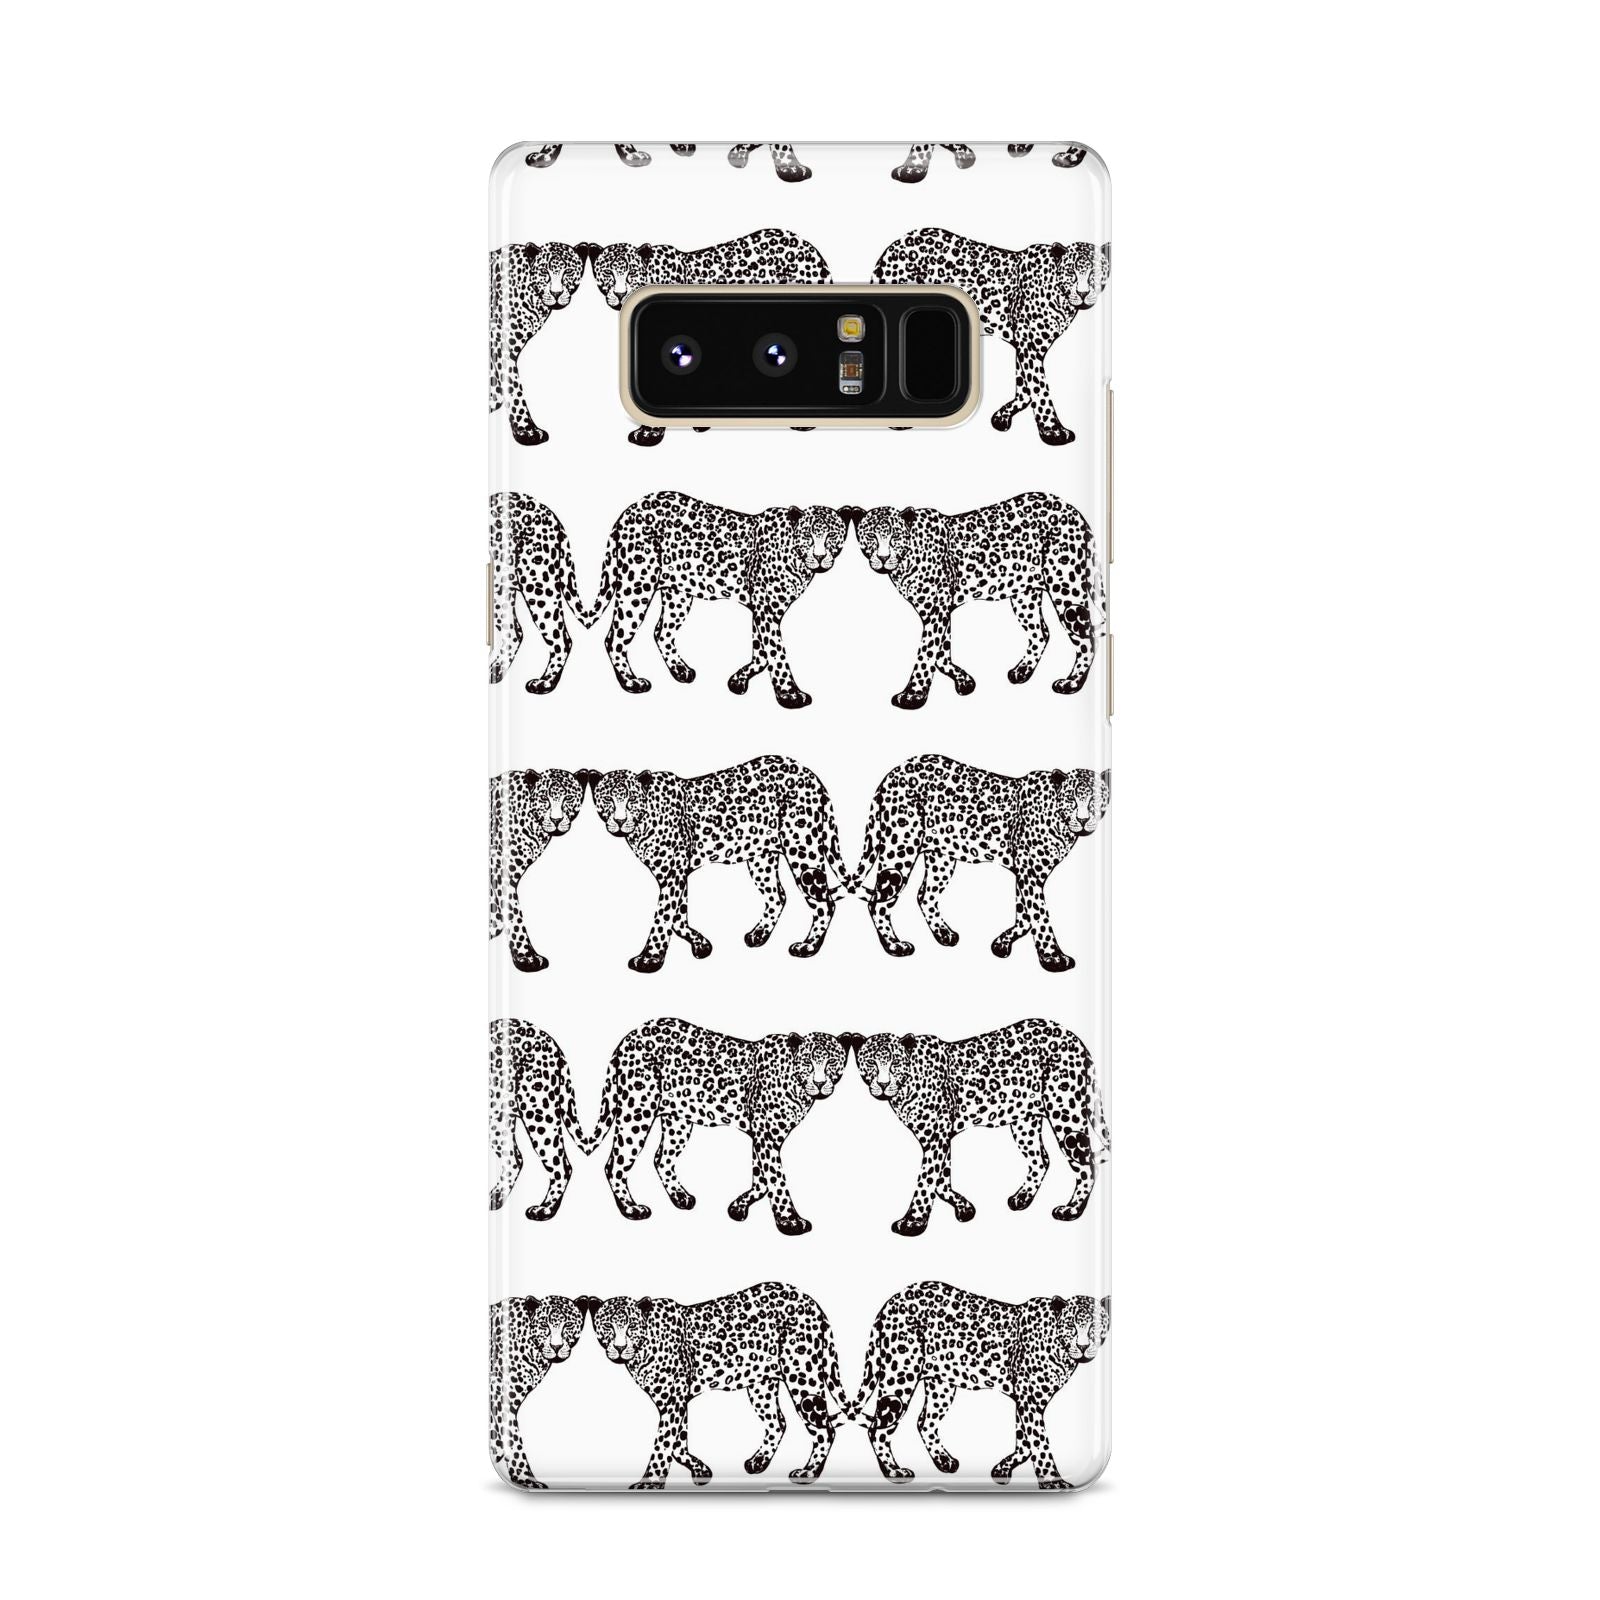 Monochrome Mirrored Leopard Print Samsung Galaxy S8 Case